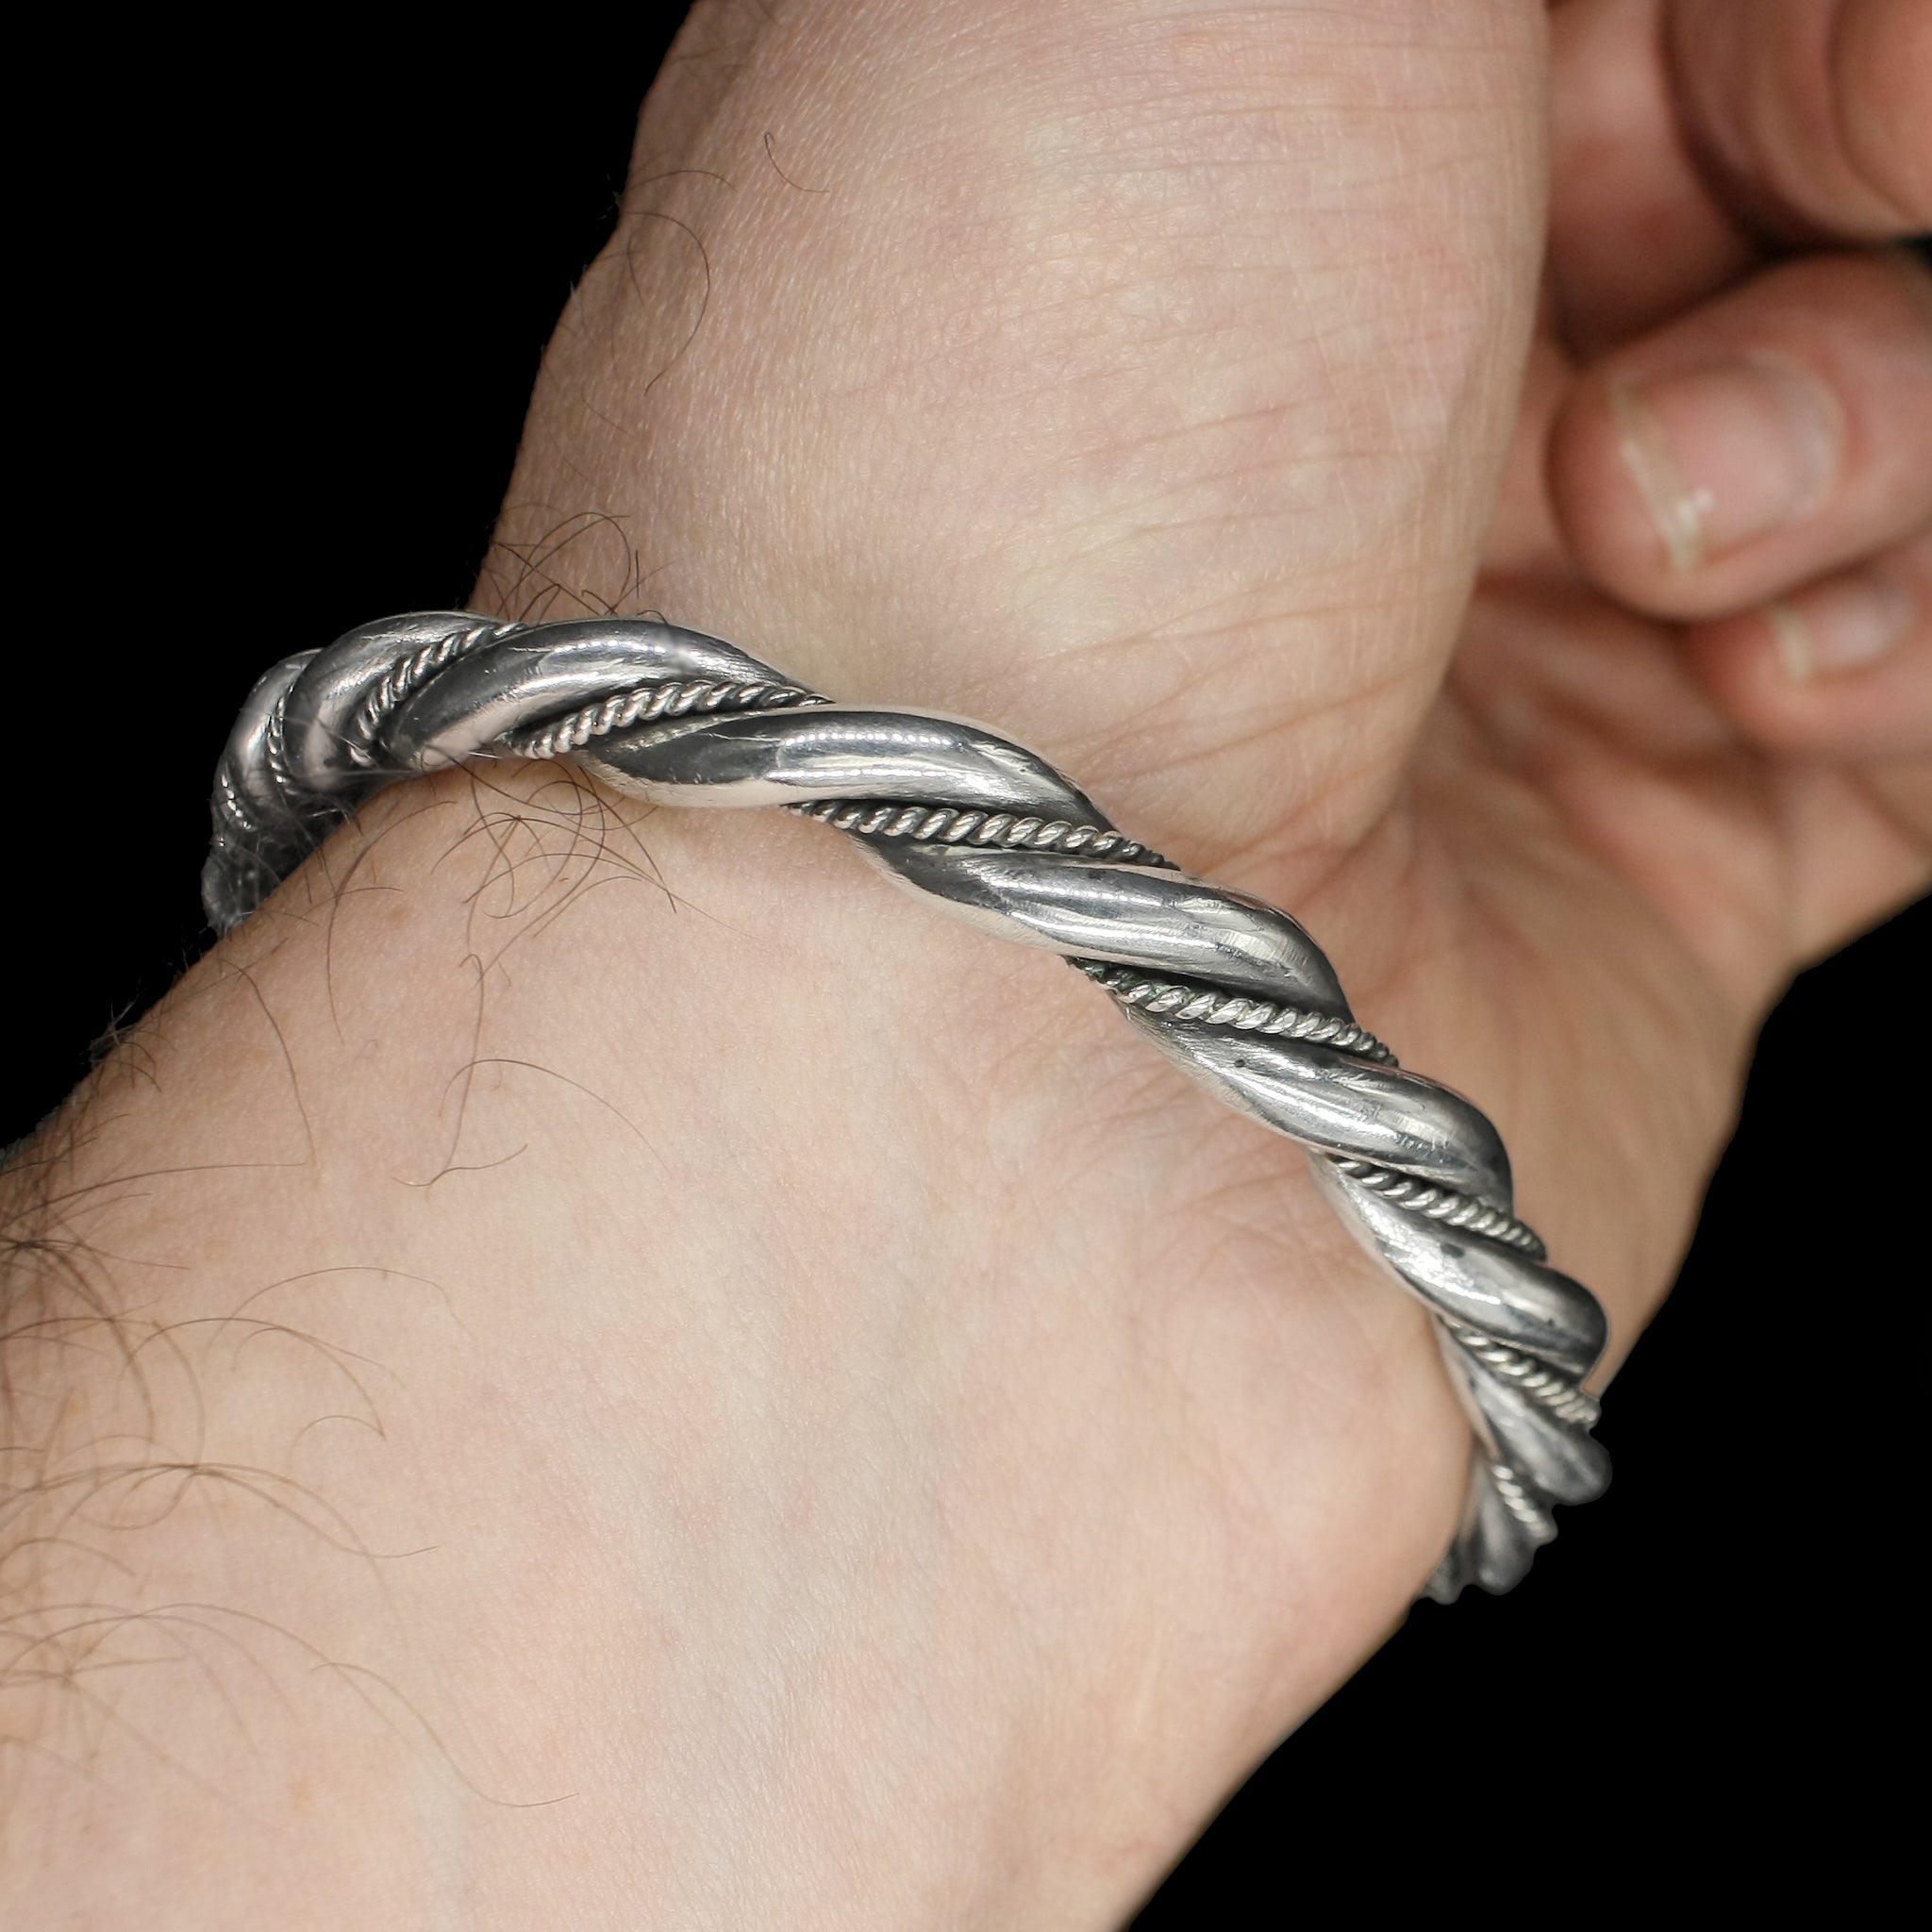 Medium Twisted Silver Arm Ring on Wrist